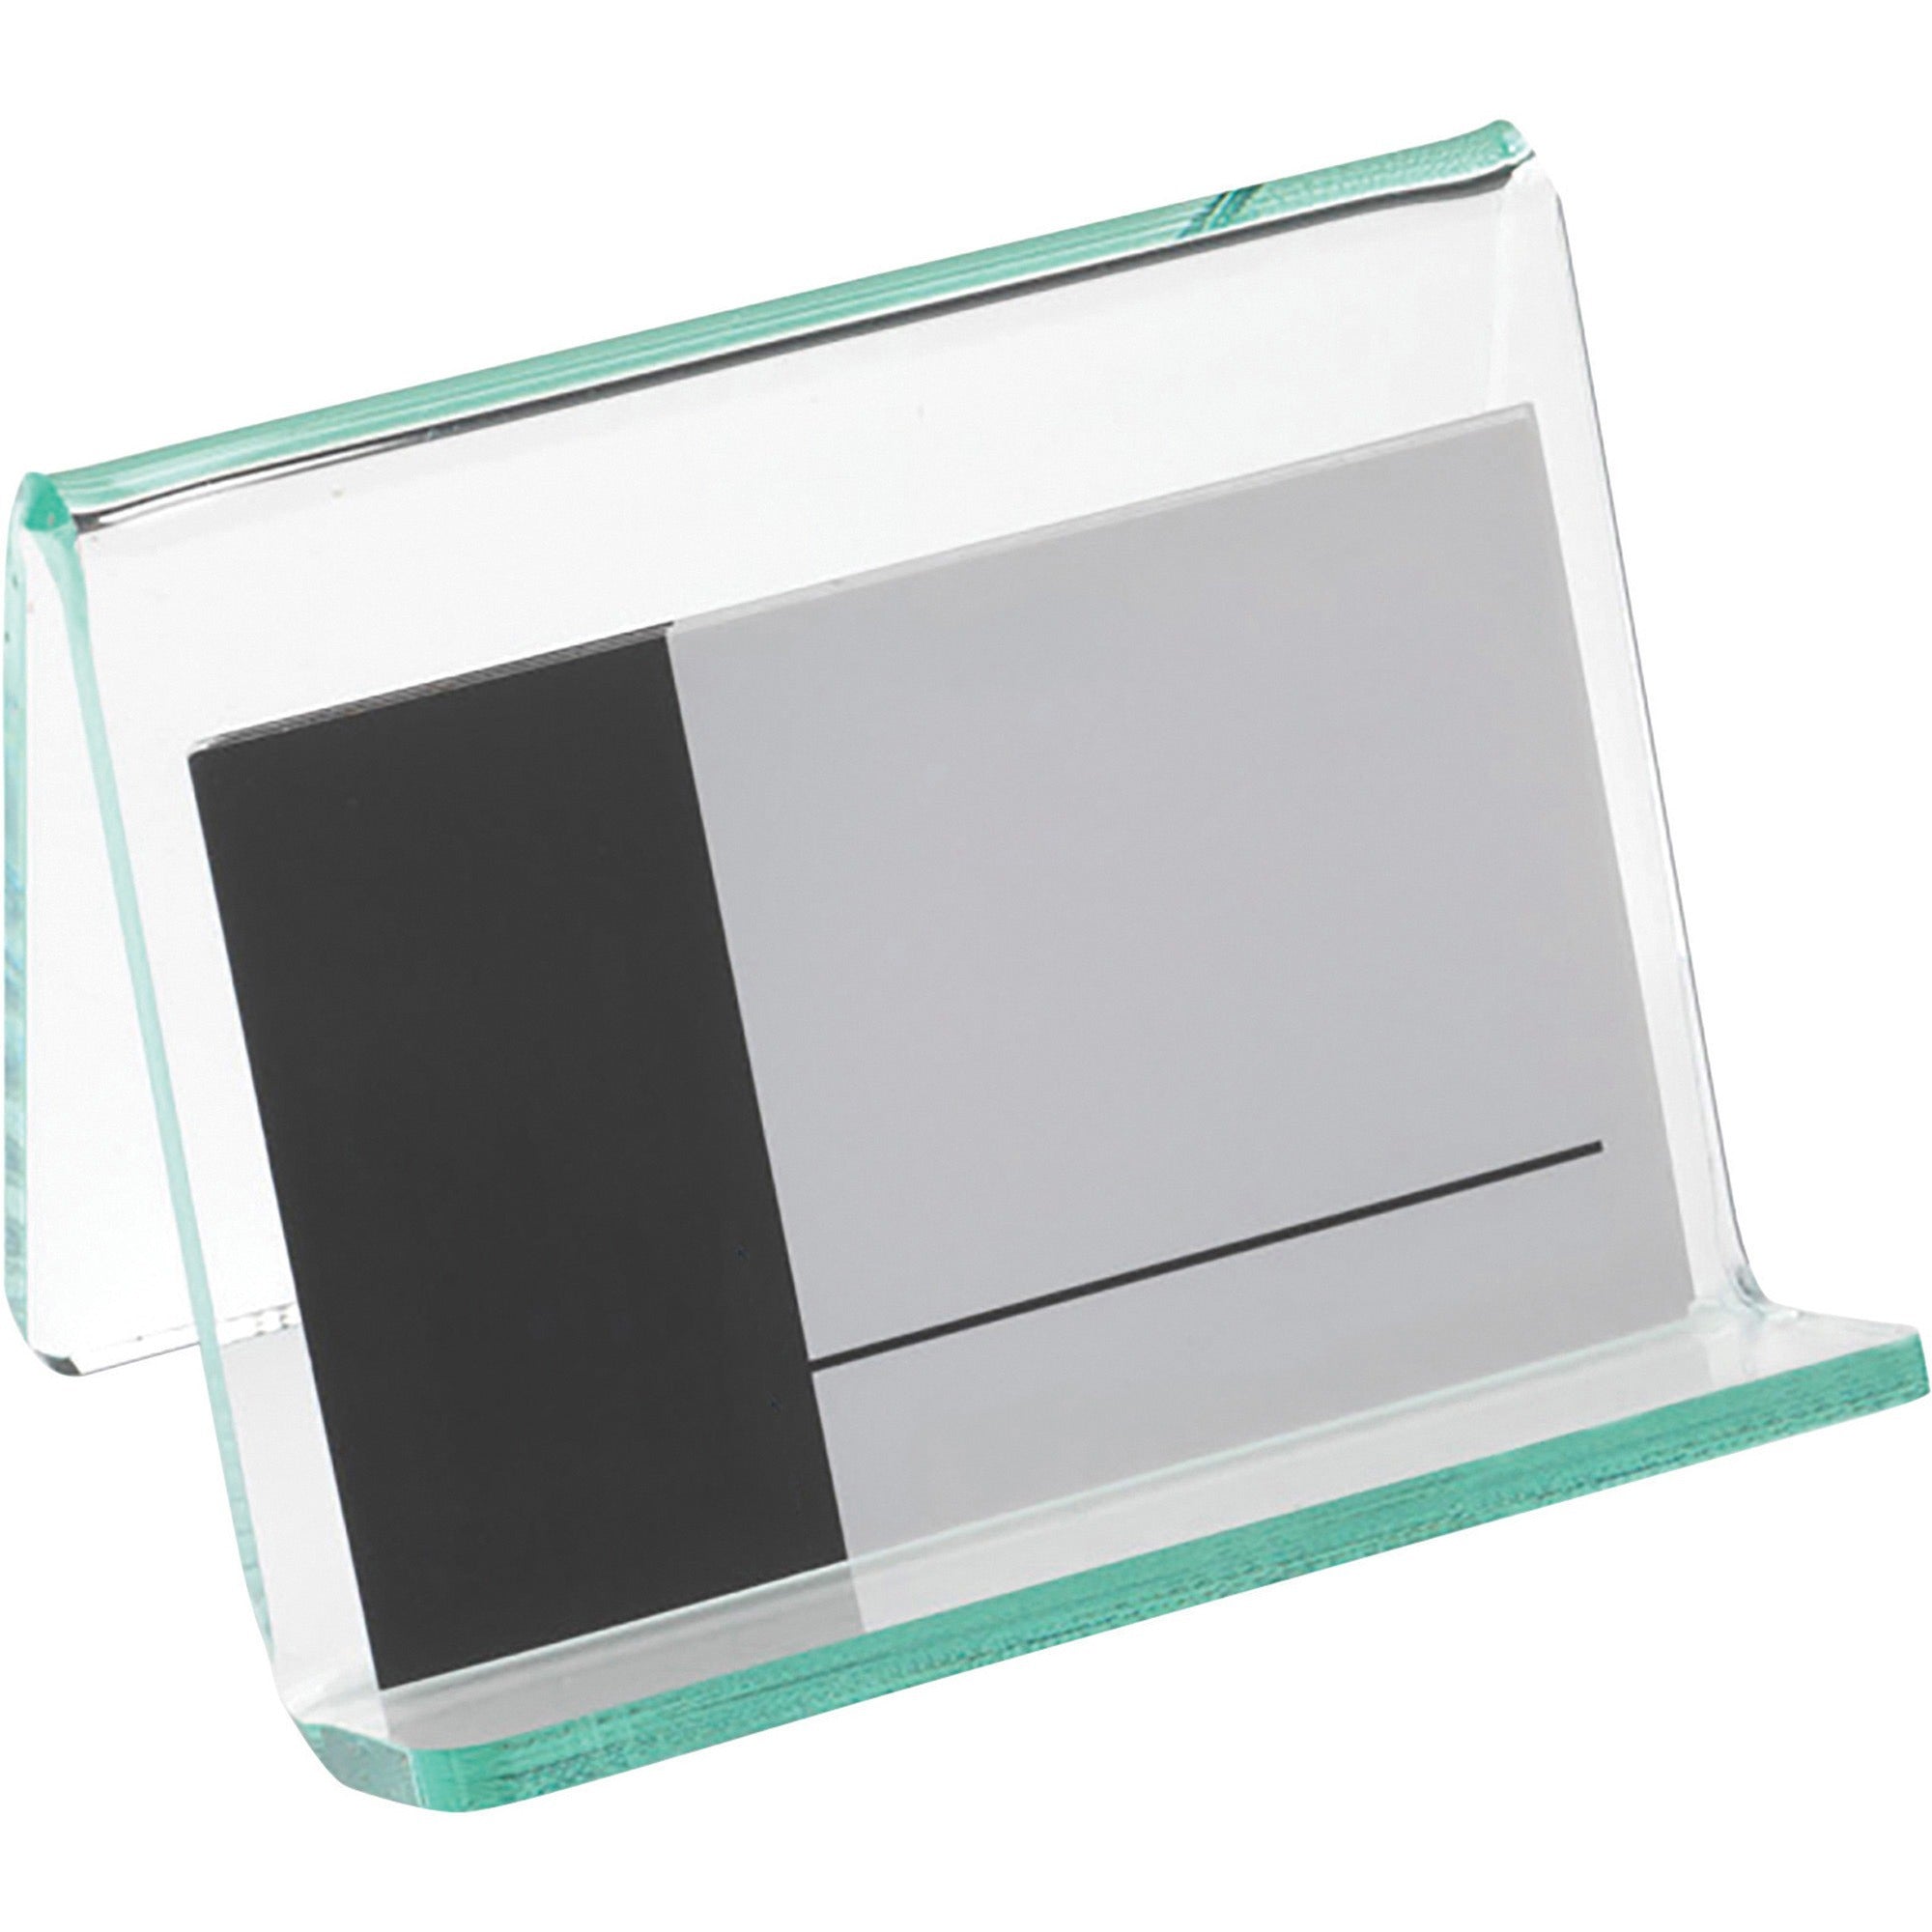 Lorell Business Card Holder - Acrylic - 1 Each - Green, Transparent - 